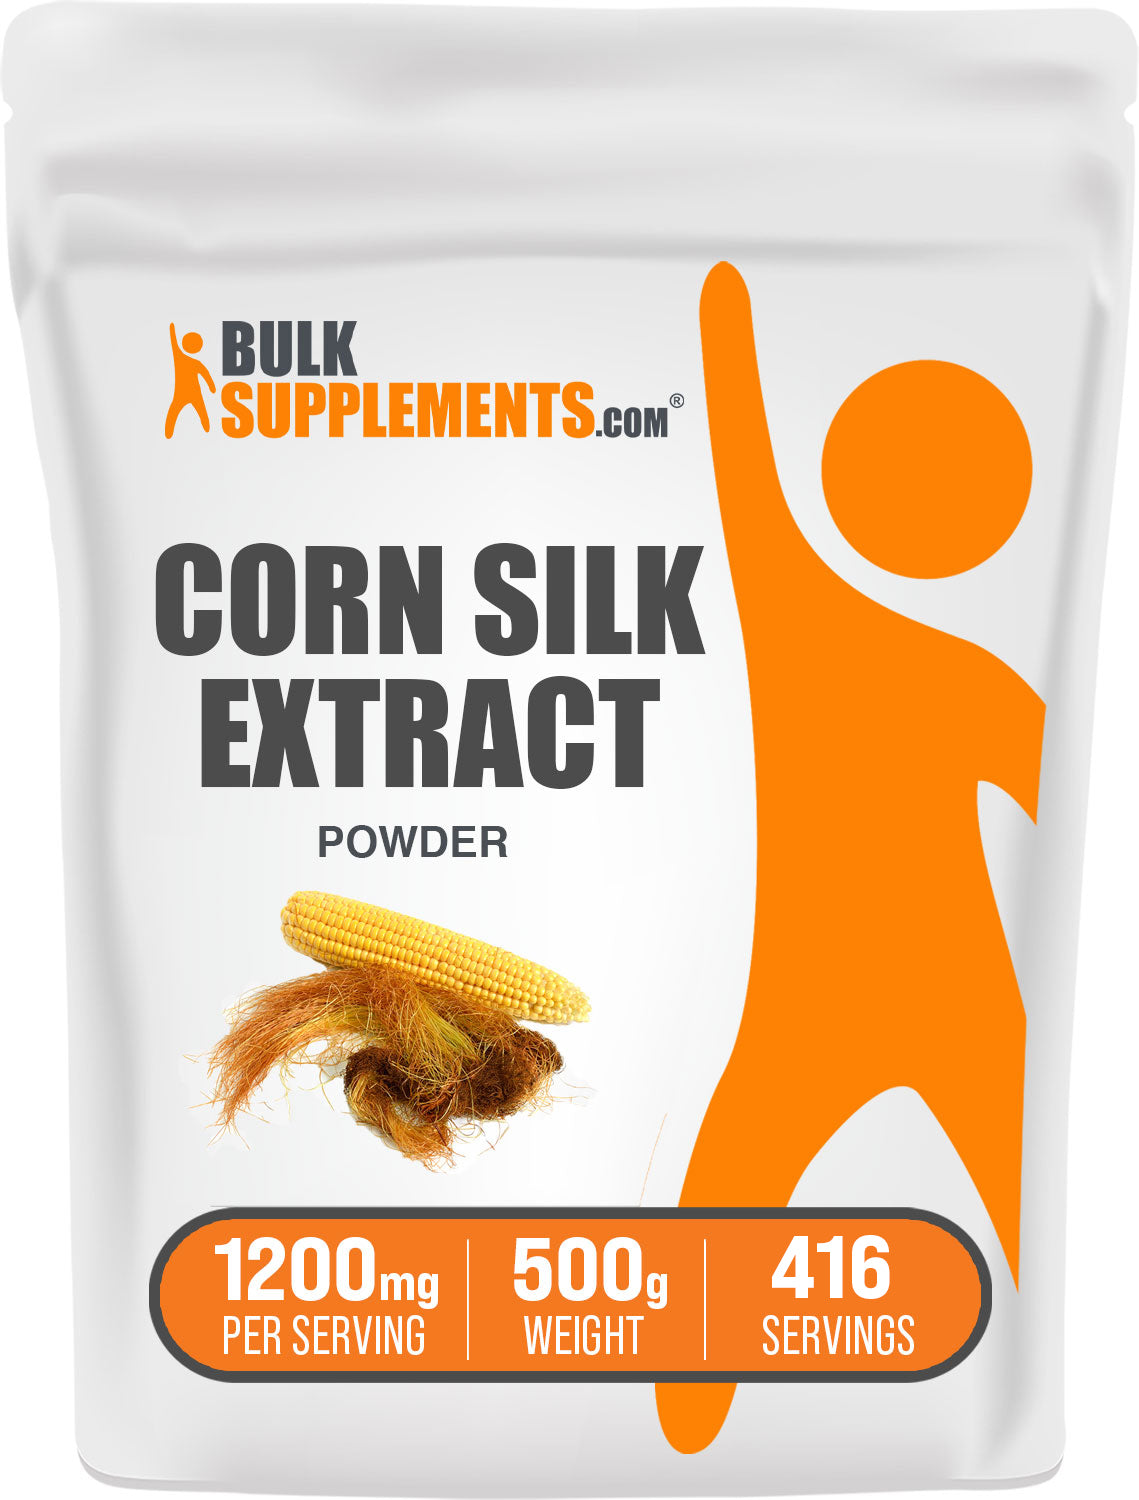 Corn Silk Extract powder bag 500g